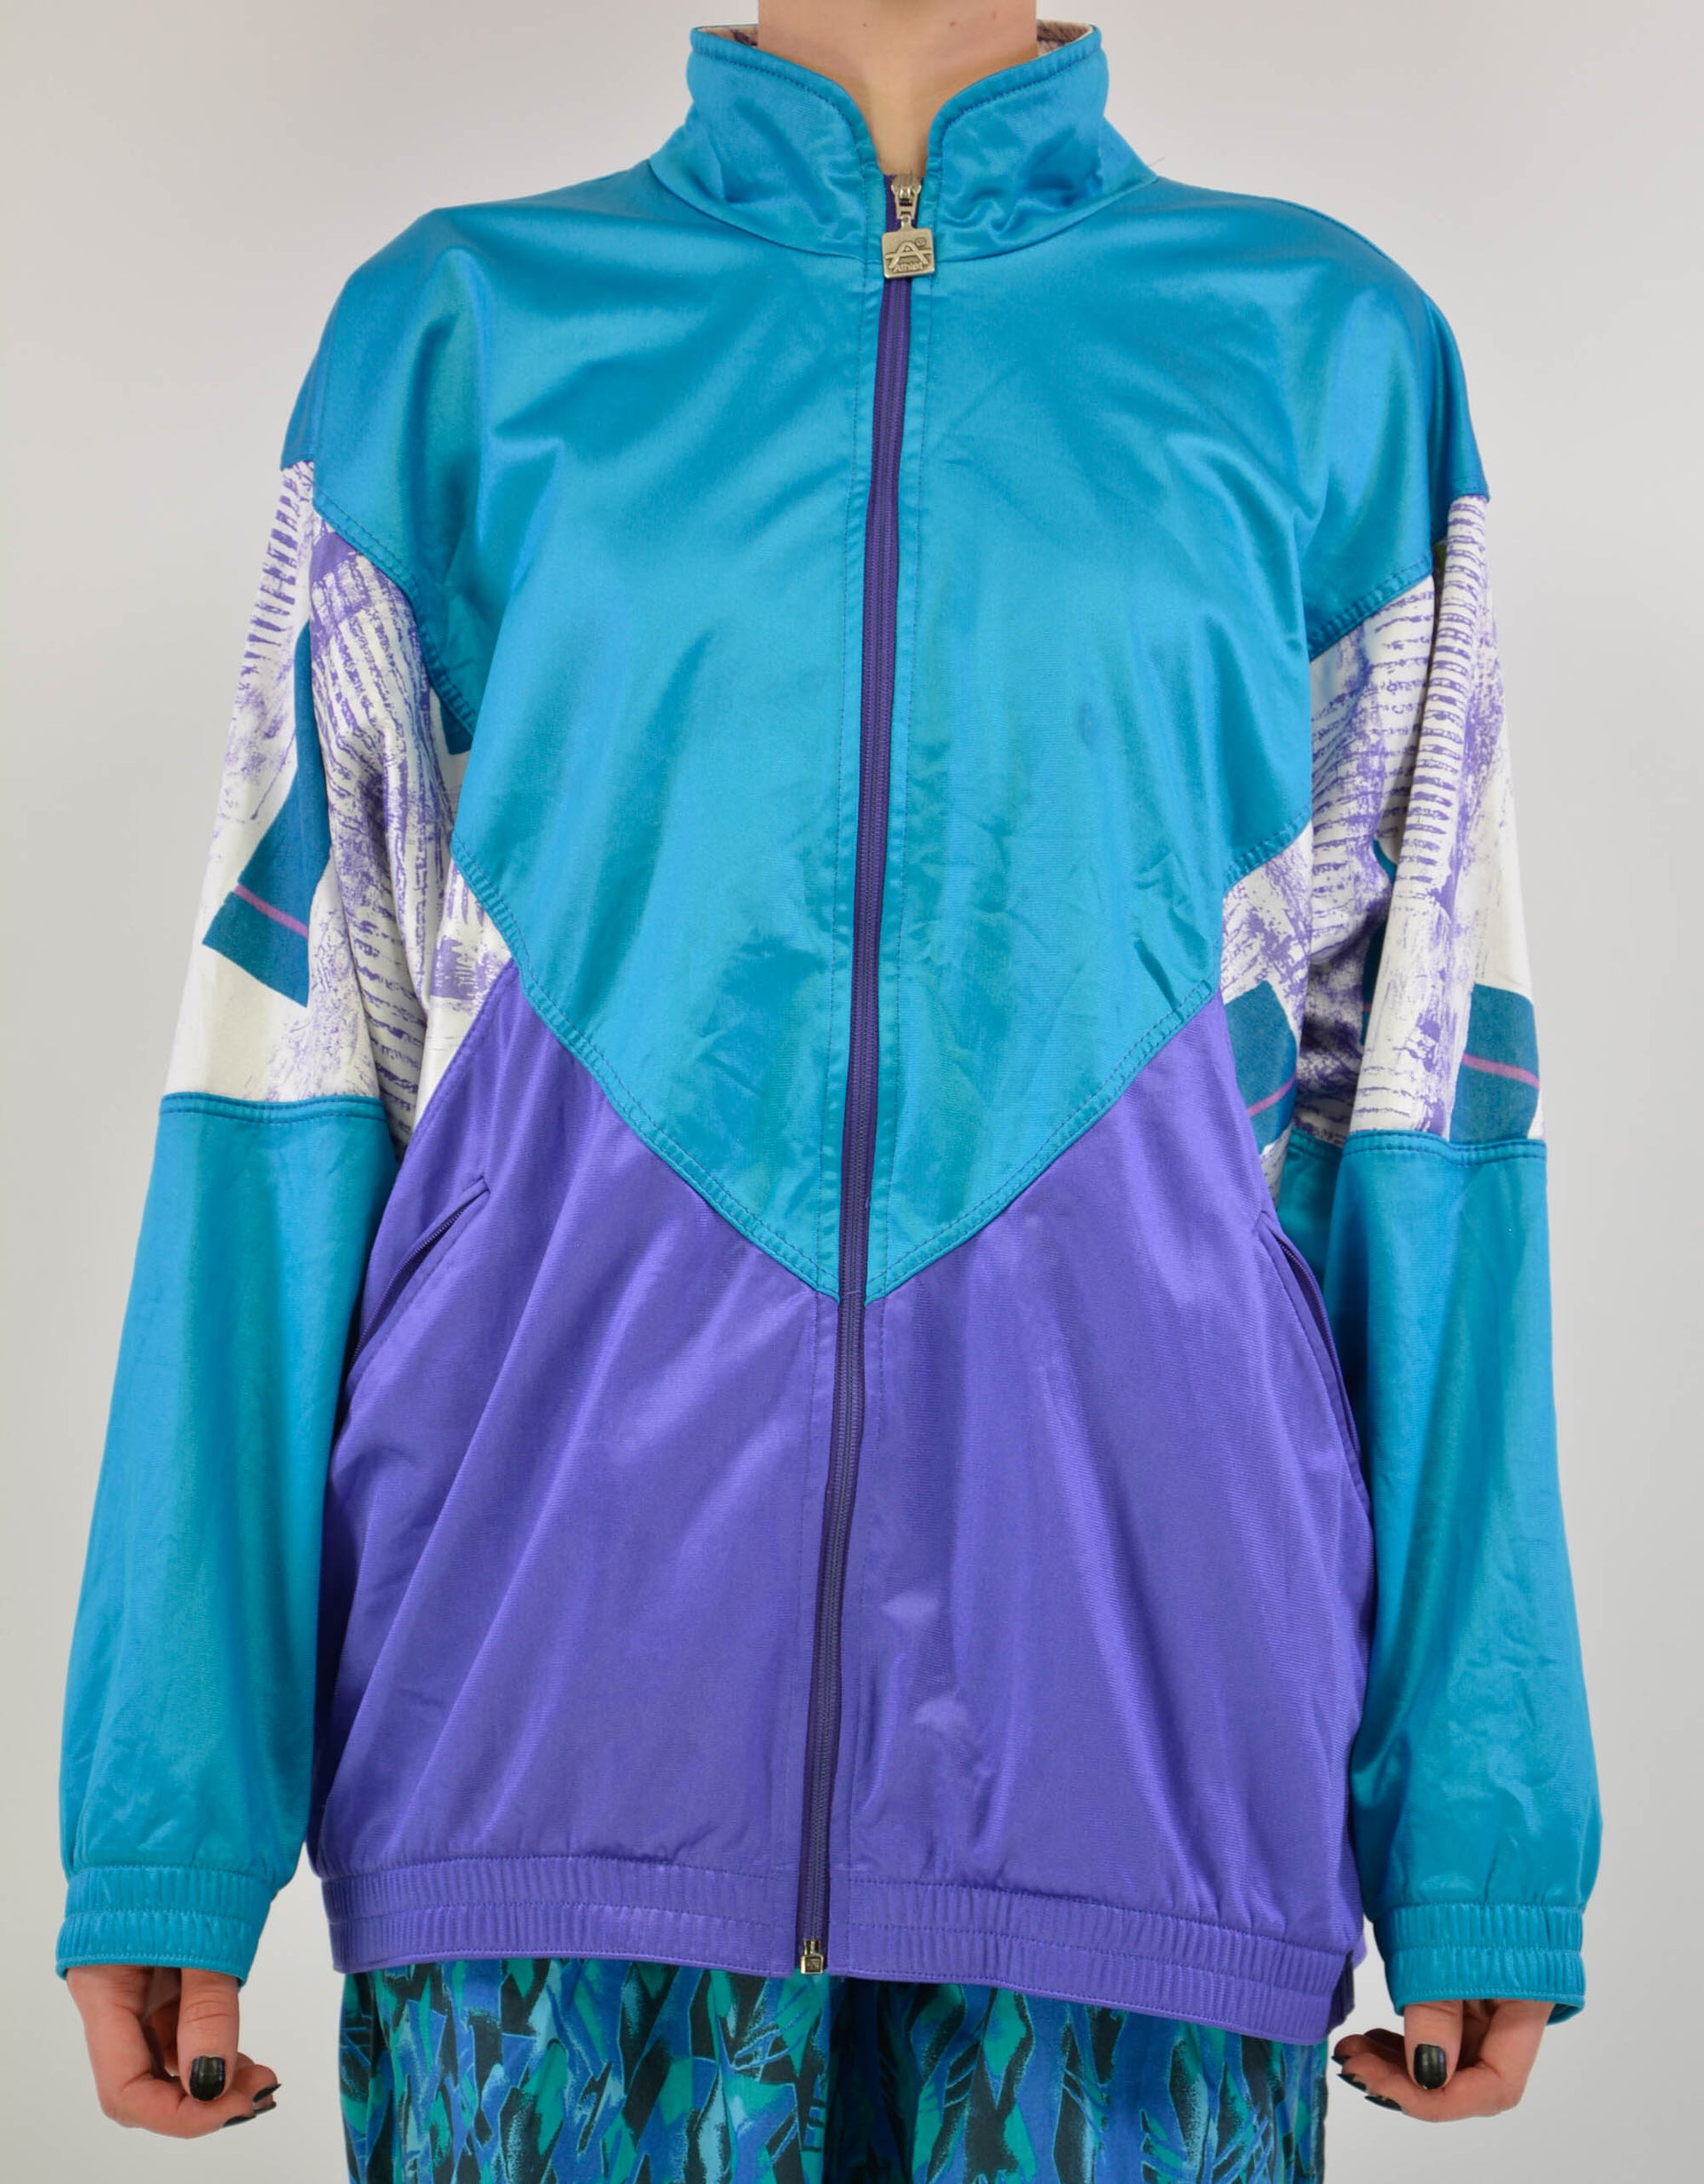 90s training jacket - PICKNWEIGHT - VINTAGE KILO STORE